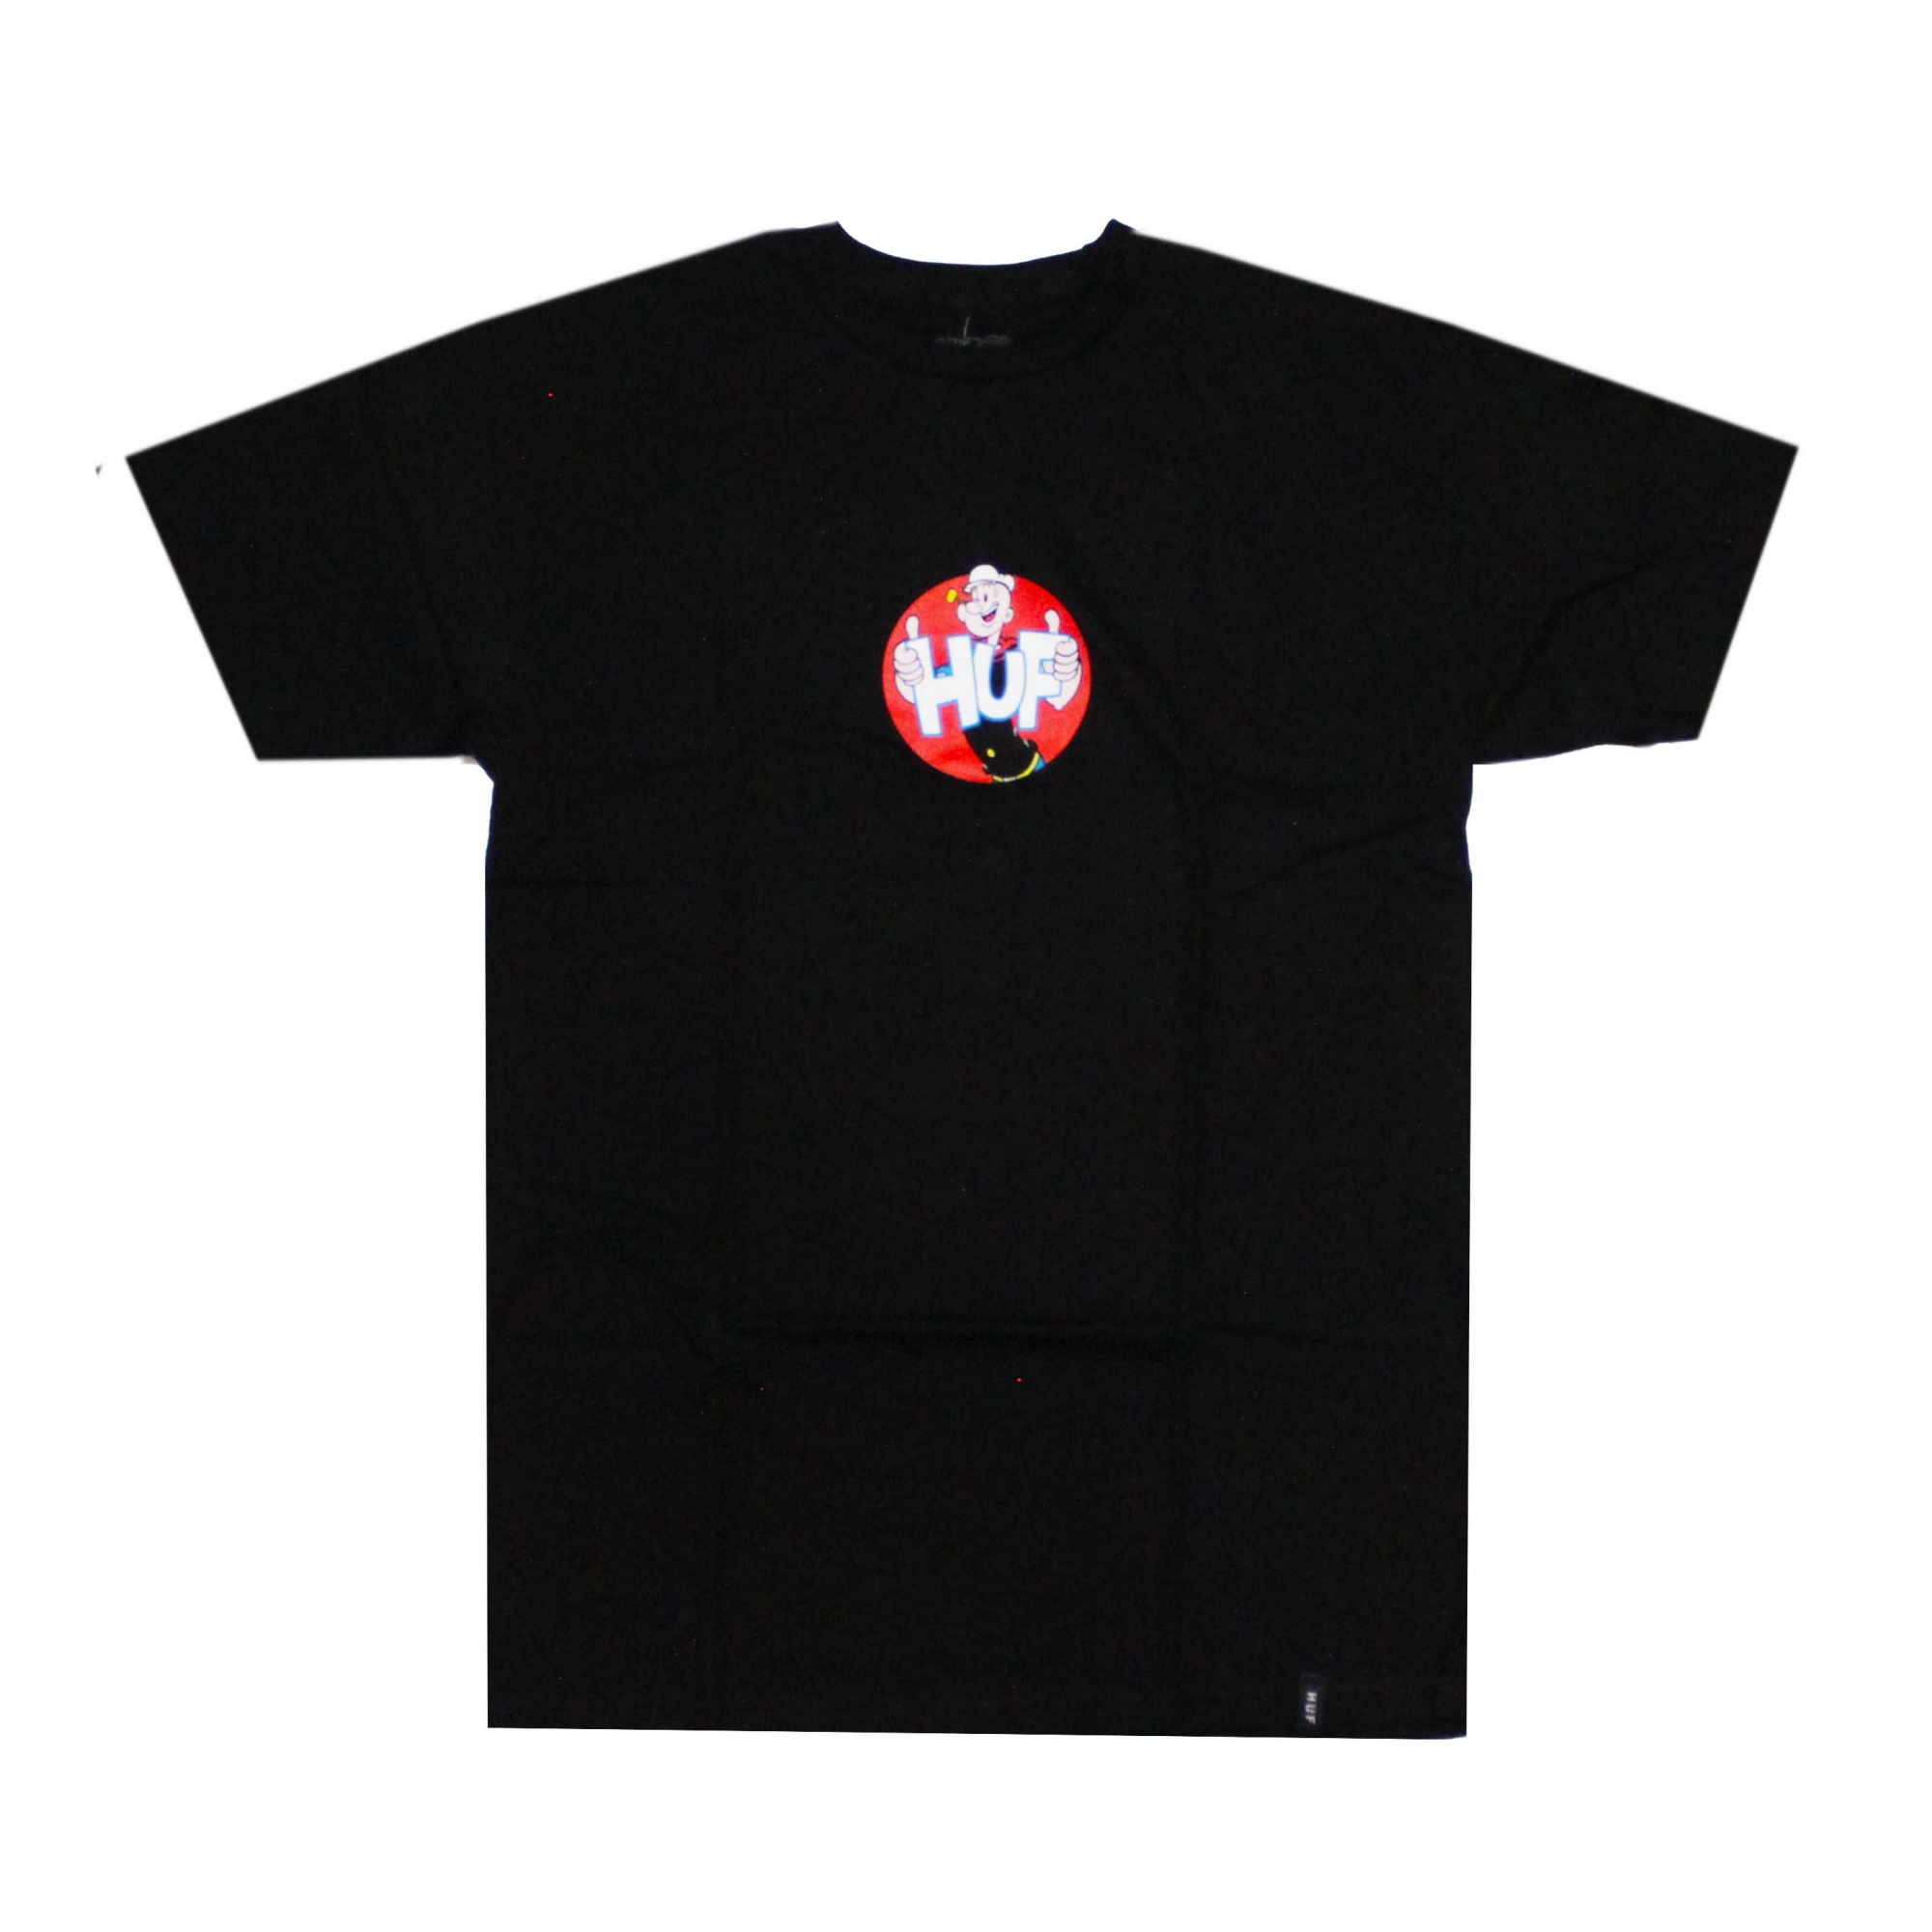 Camiseta HUF x Popeye Show - Preto (Importado)